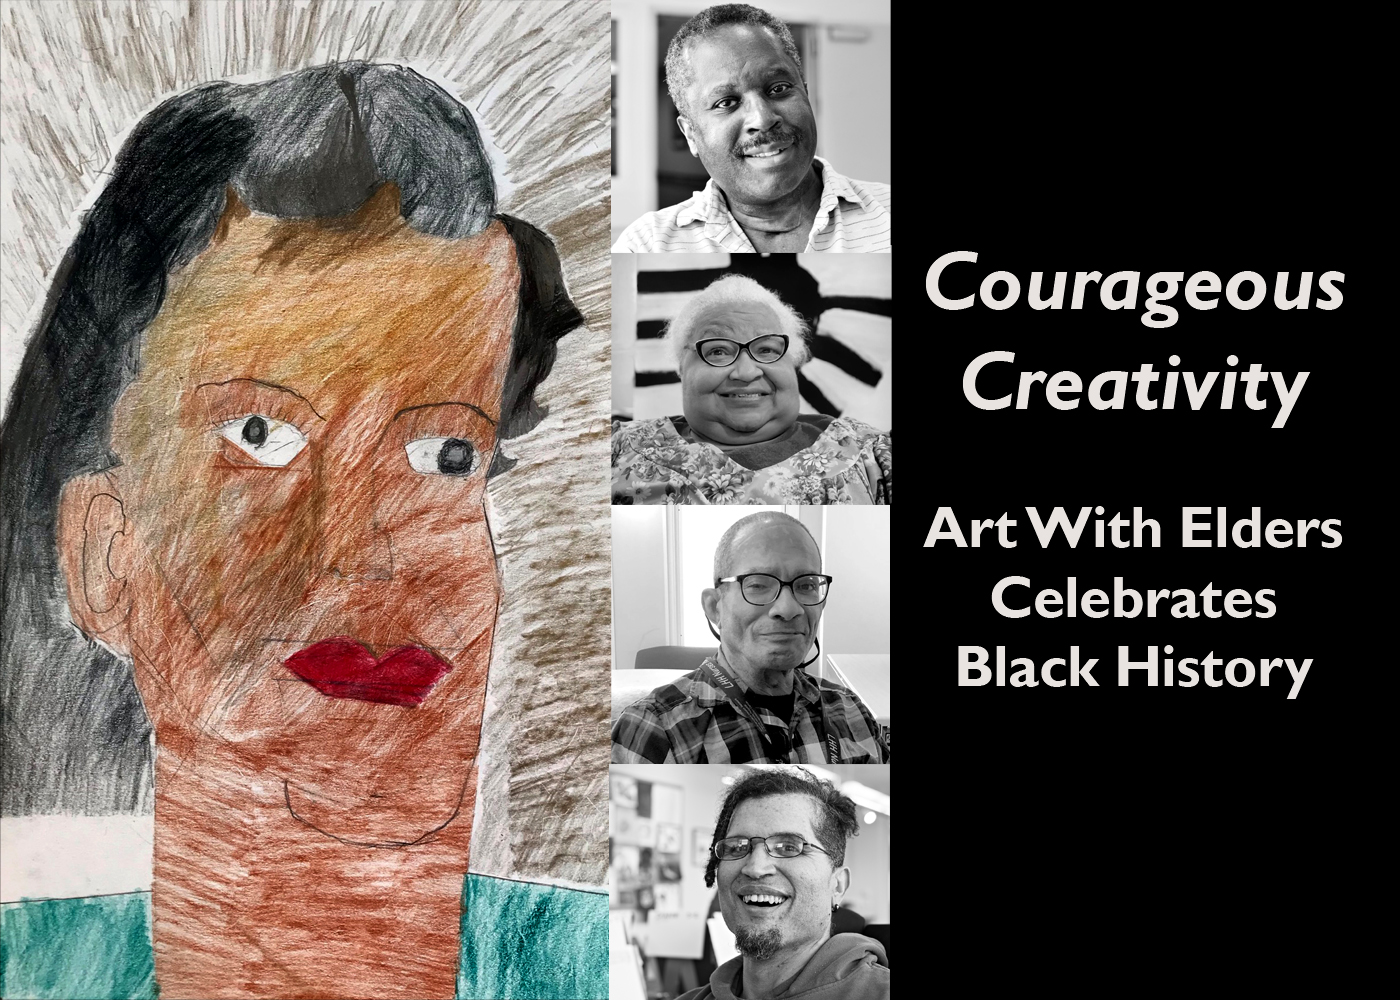 Courageous Creativity - Celebrating Black History